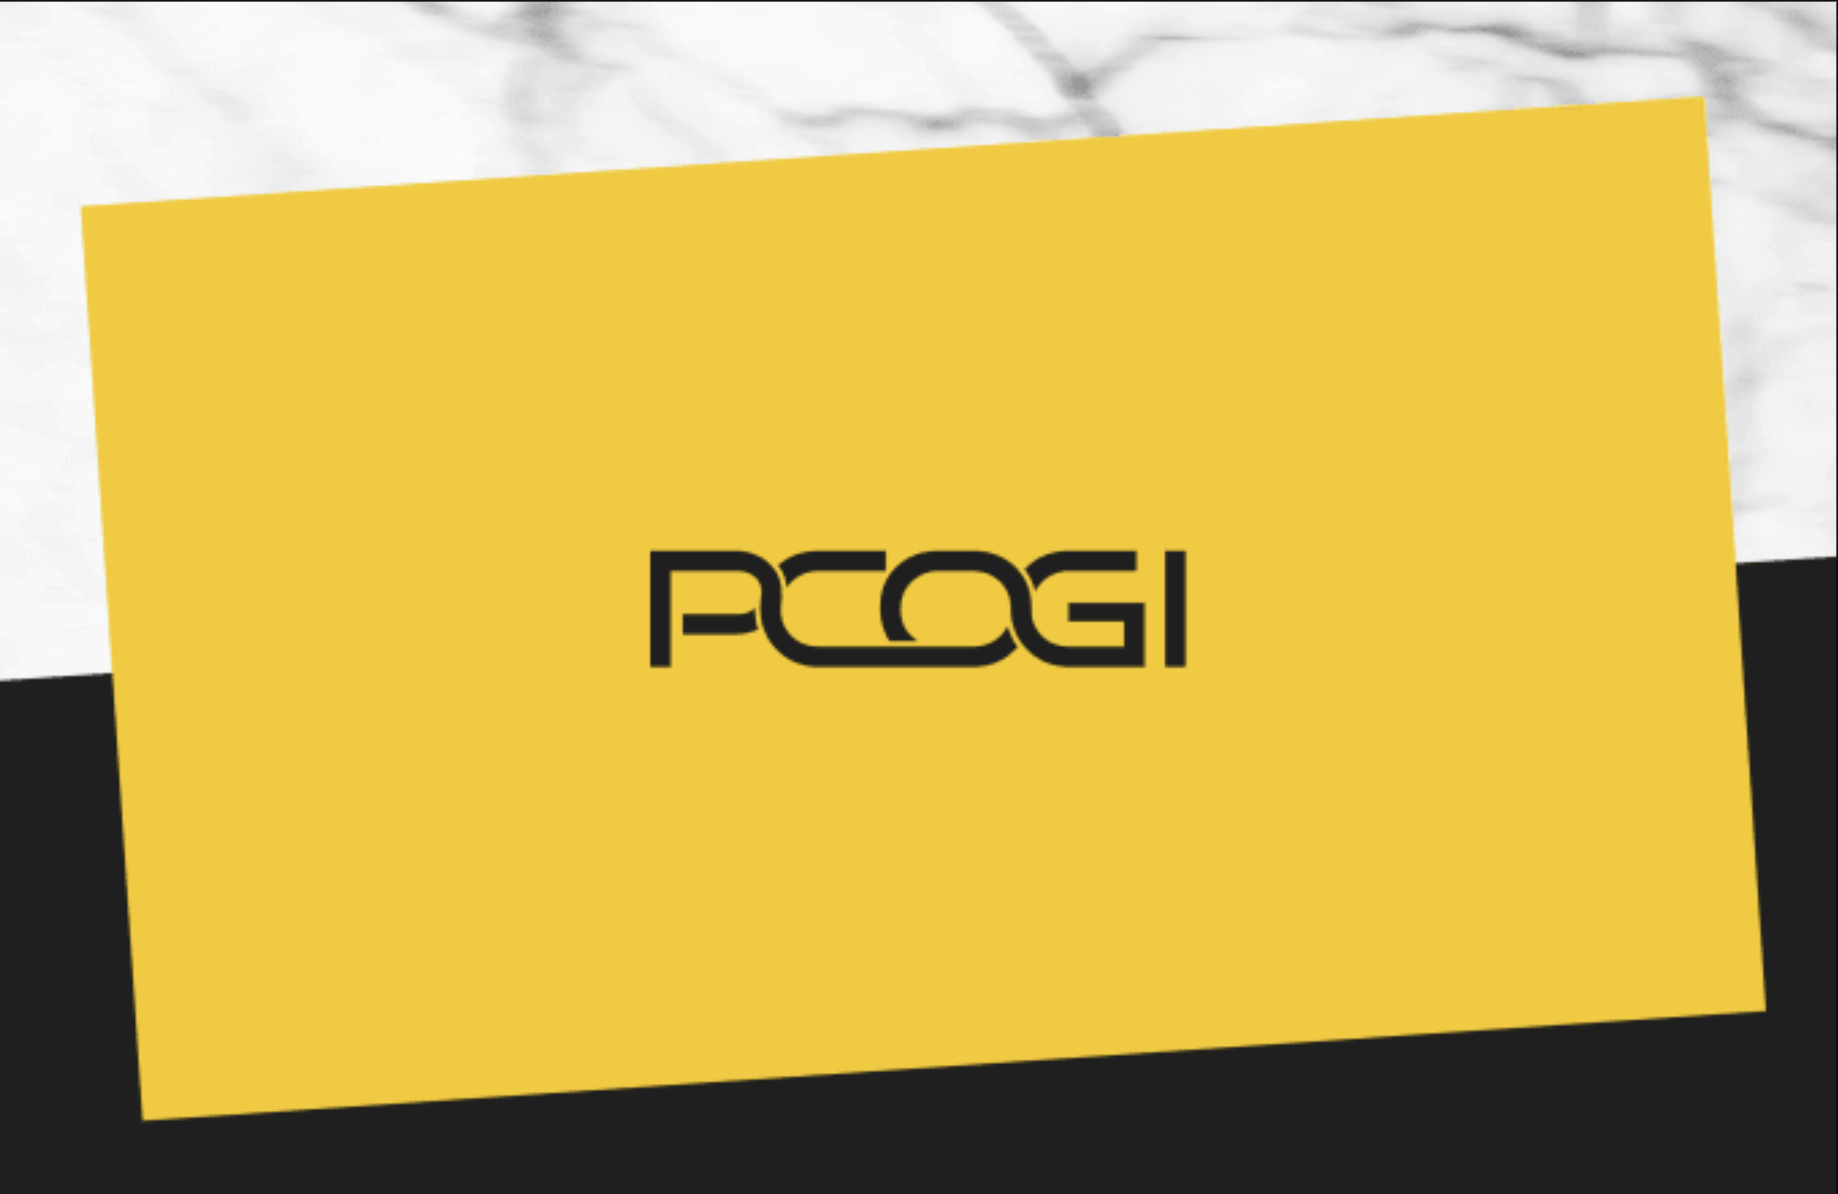 Sample text logo by Fiverr designer - PCOGI